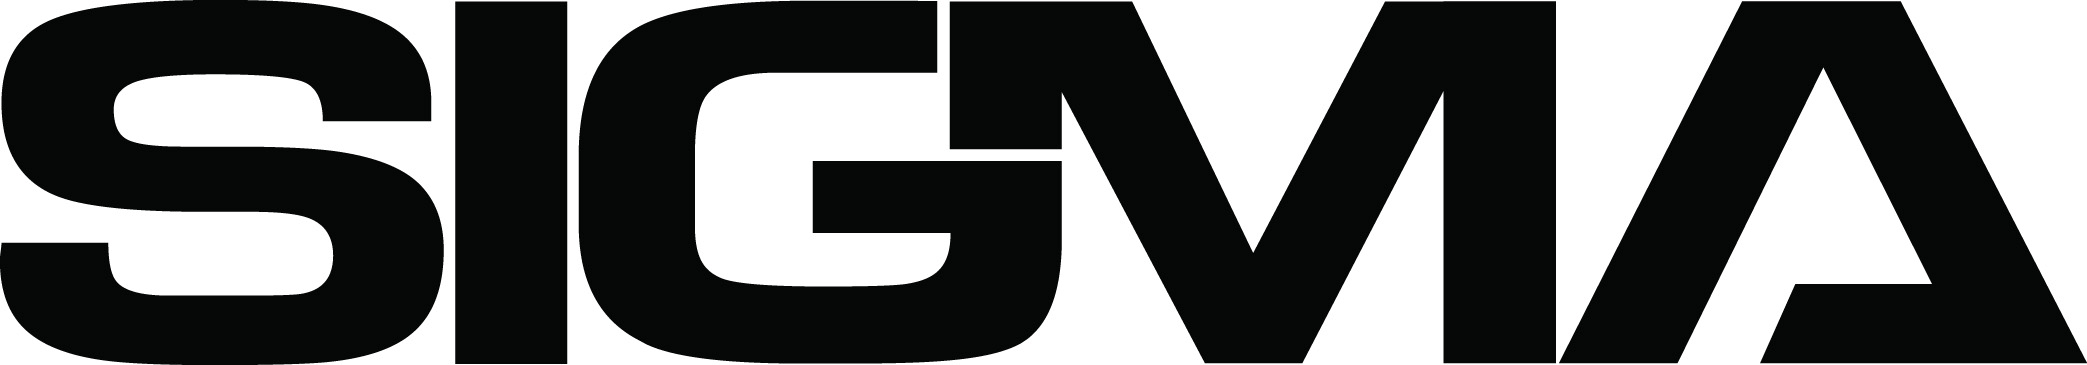 Http sigma. Sigma logo. Sigma надпись. Sigma бренд логотип. Модельное агентство Сигма лого.